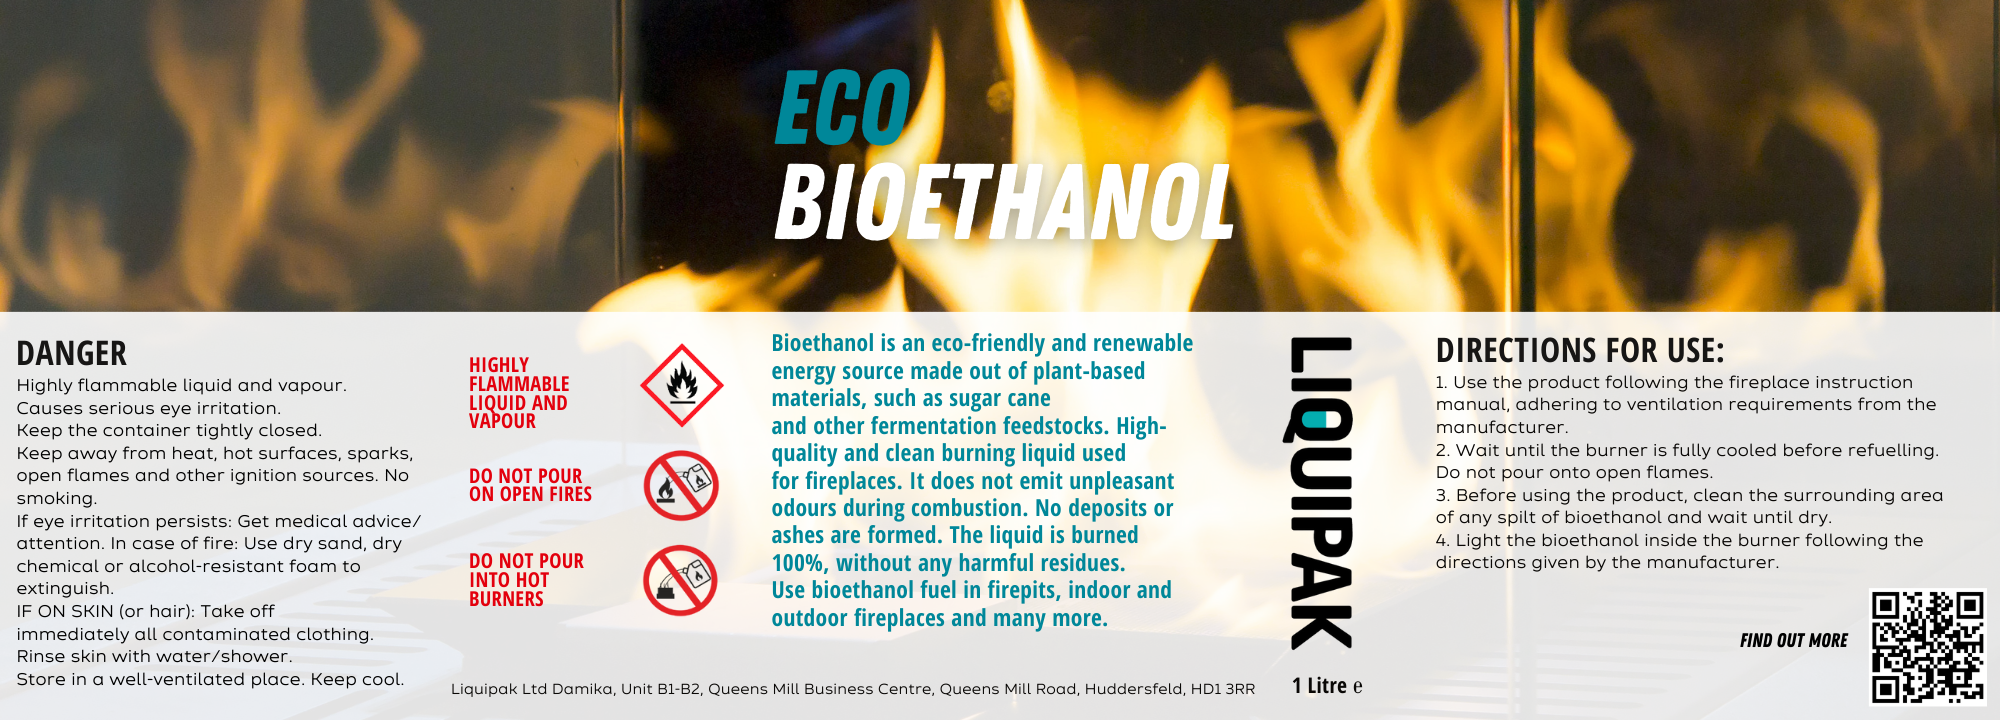 Eco Bioethanol